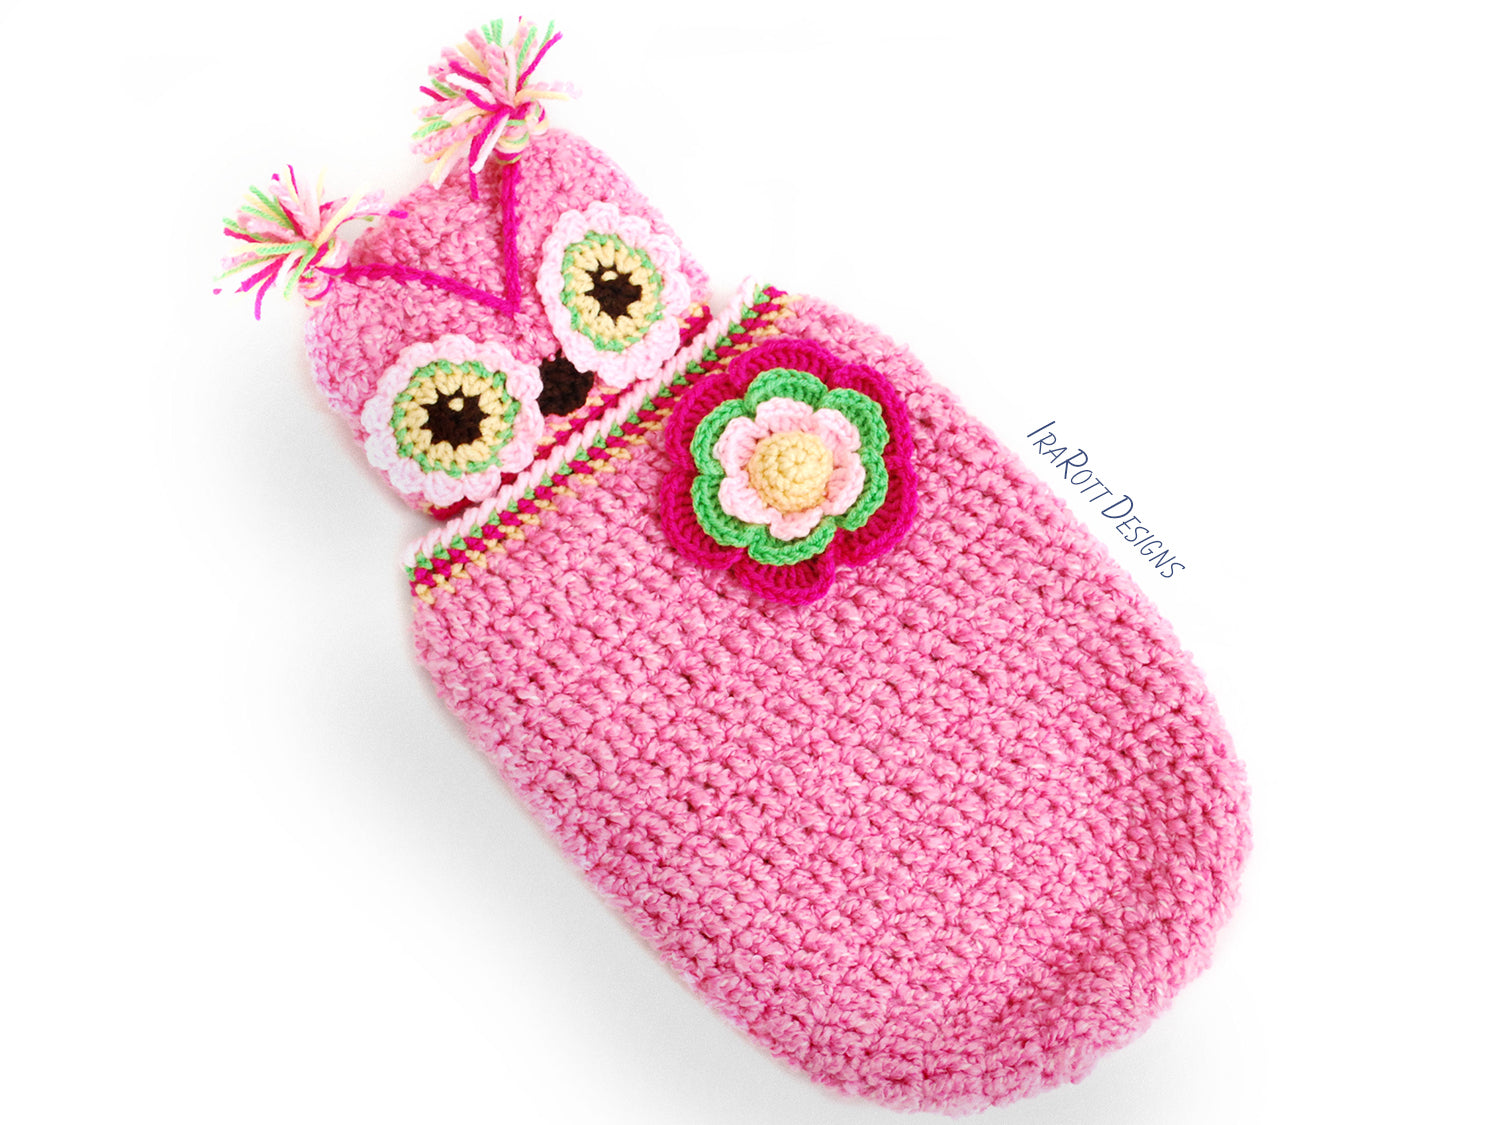 crochet owl iphone cover